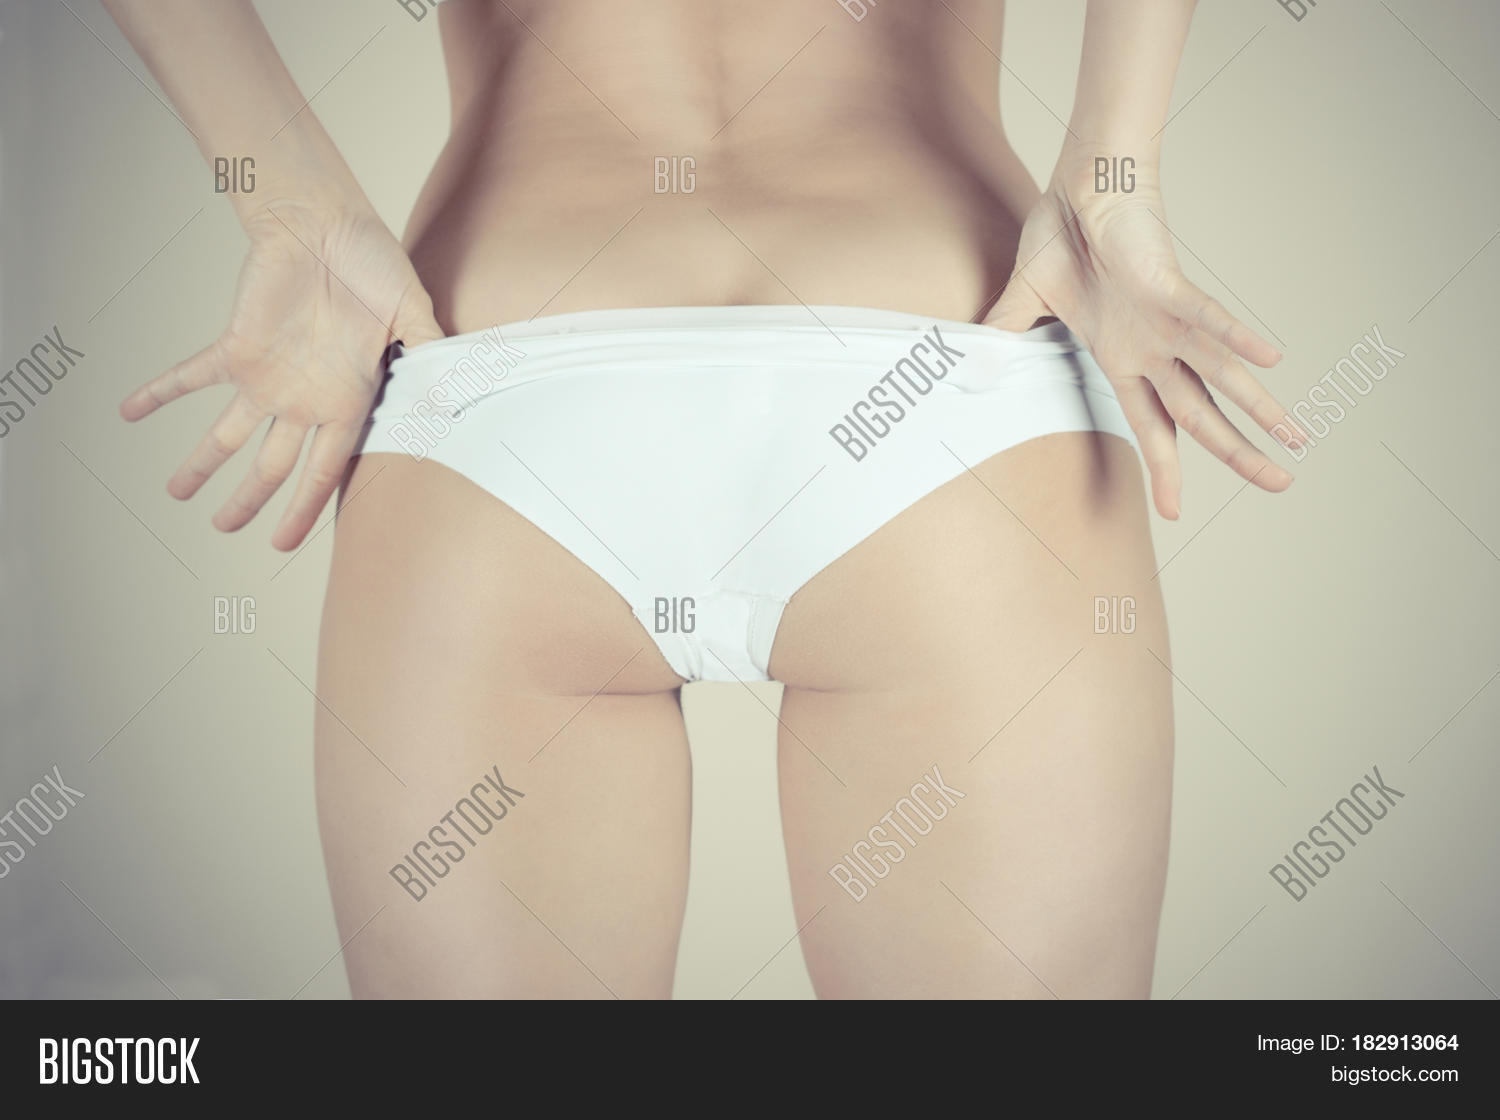 belinda downey share women taking off underwear photos